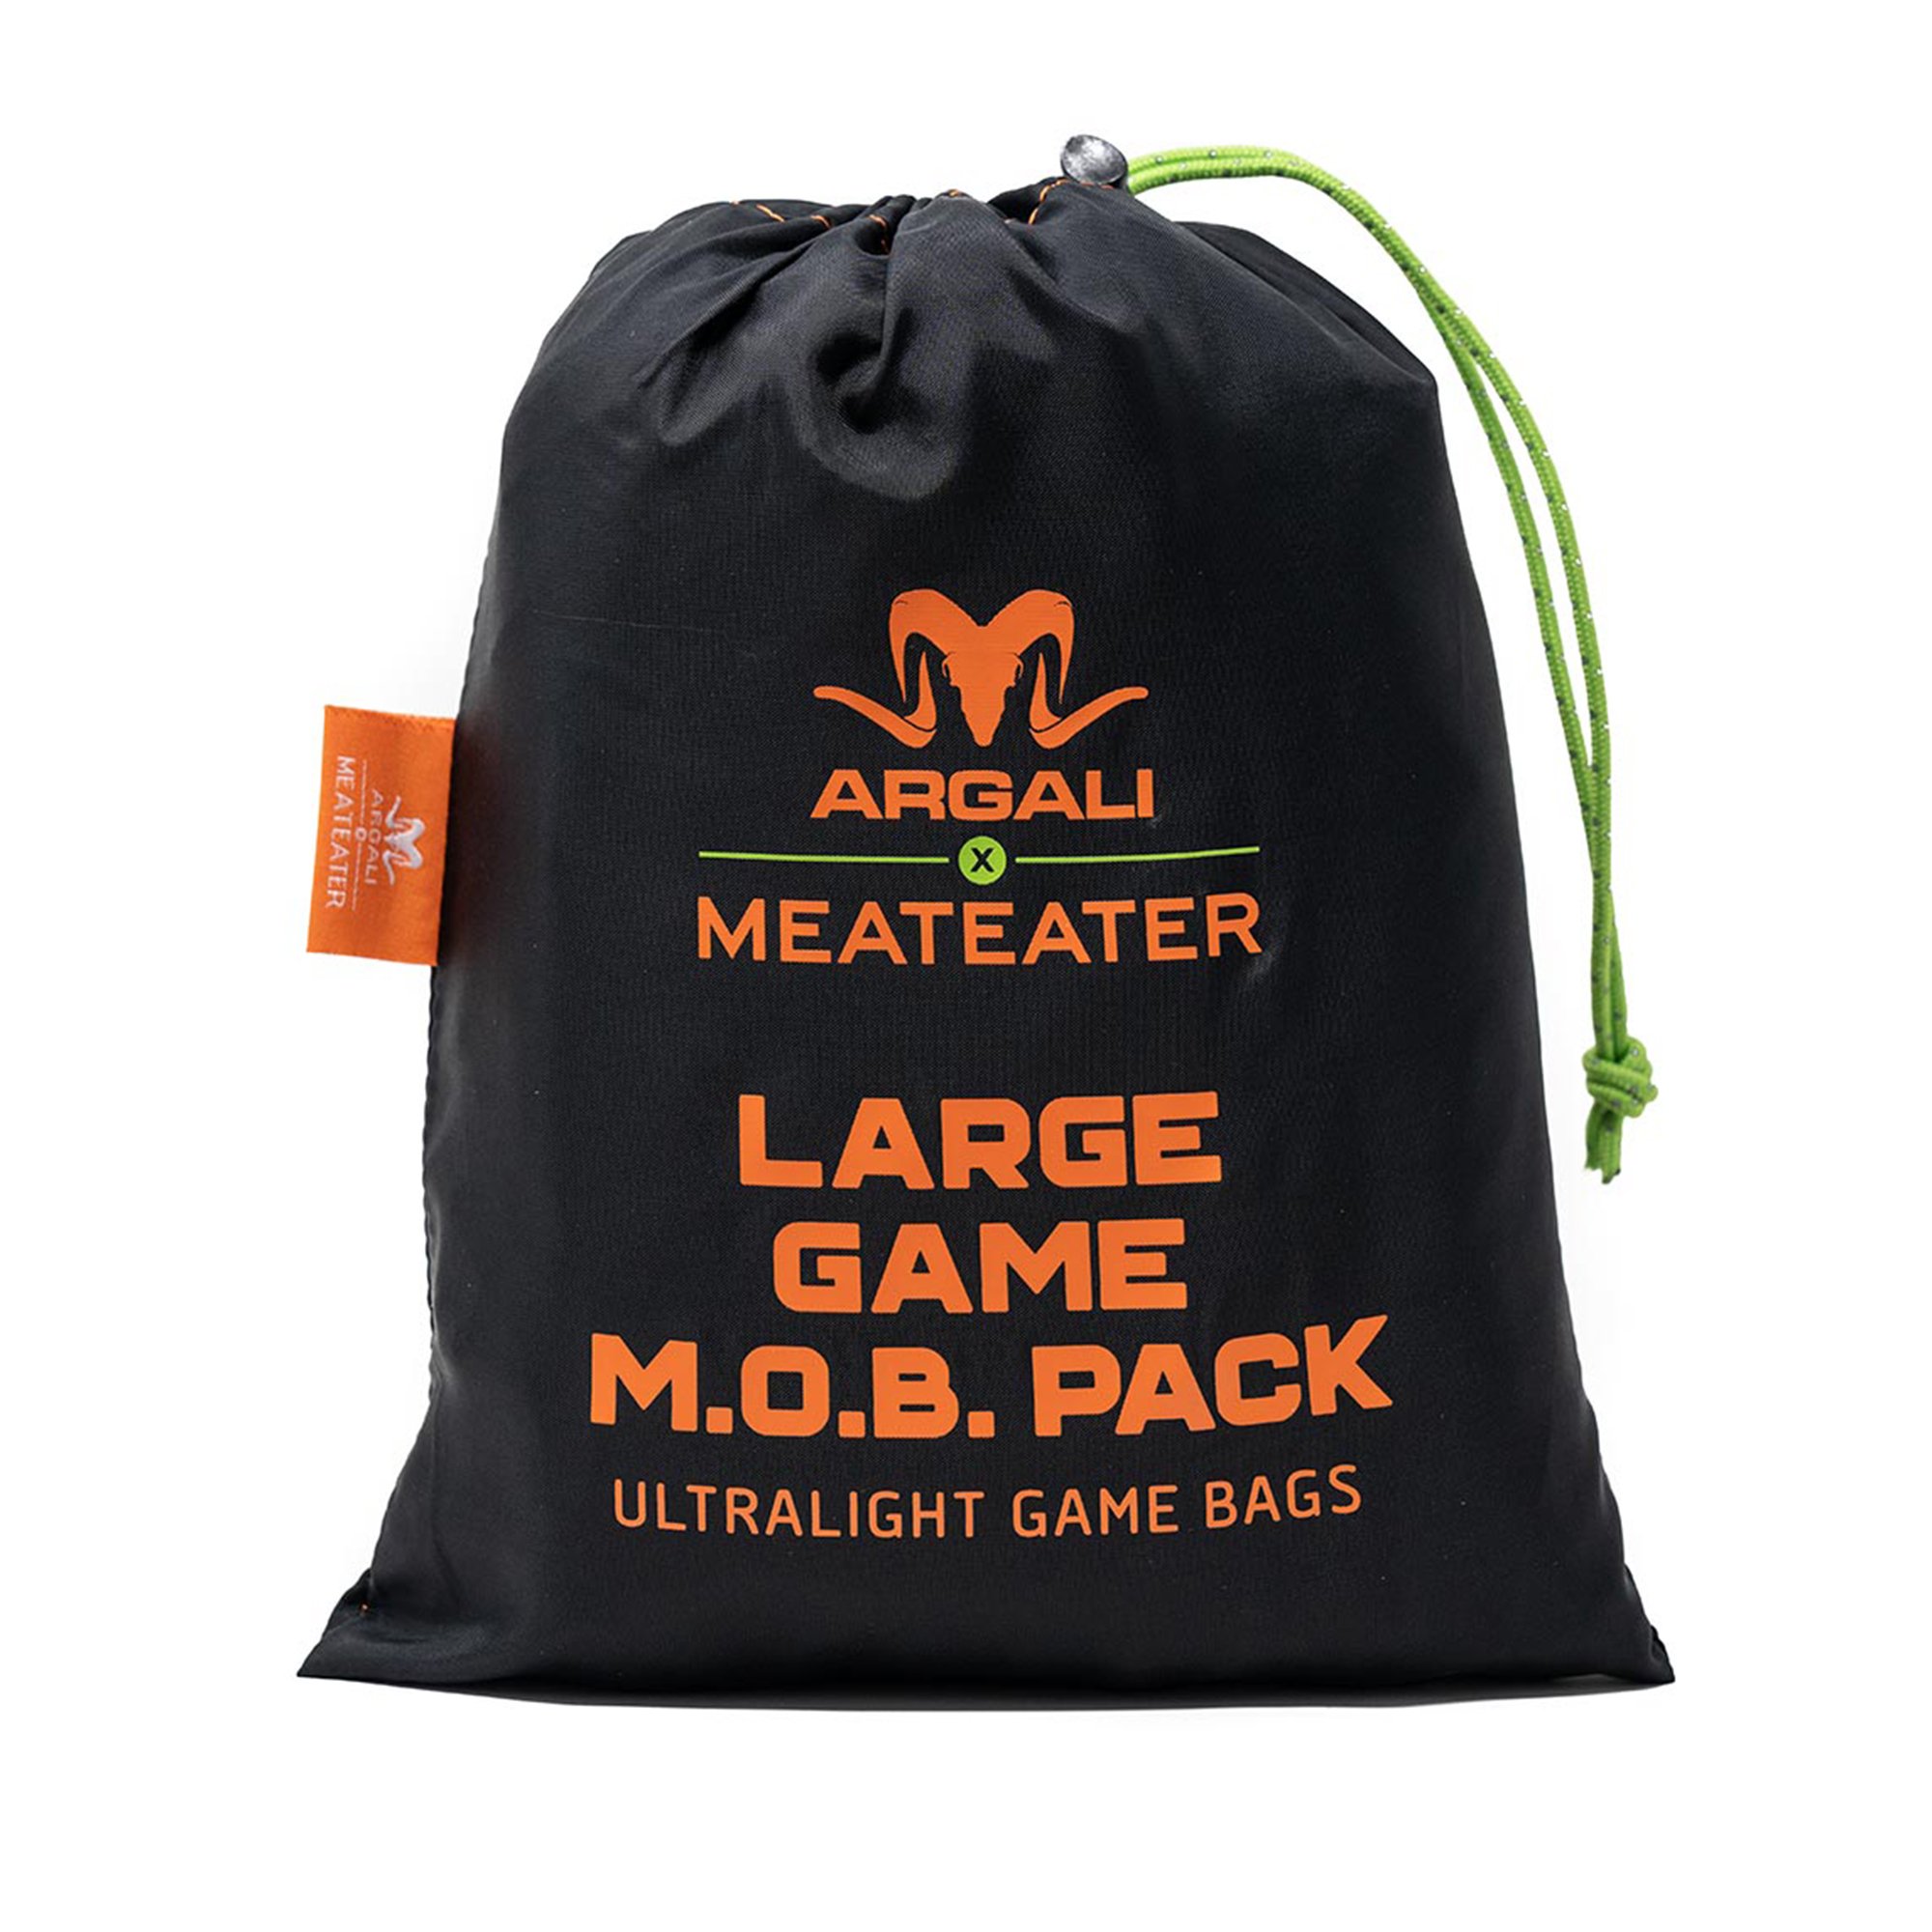 https://store.themeateater.com/on/demandware.static/-/Sites-meateater-master/default/dw37e637de/meateater-x-argali-large-game-m-o-b-pack-game-bag-set/meateater-x-argali-large-game-m-o-b-pack-game-bag-set_global_primary.jpg